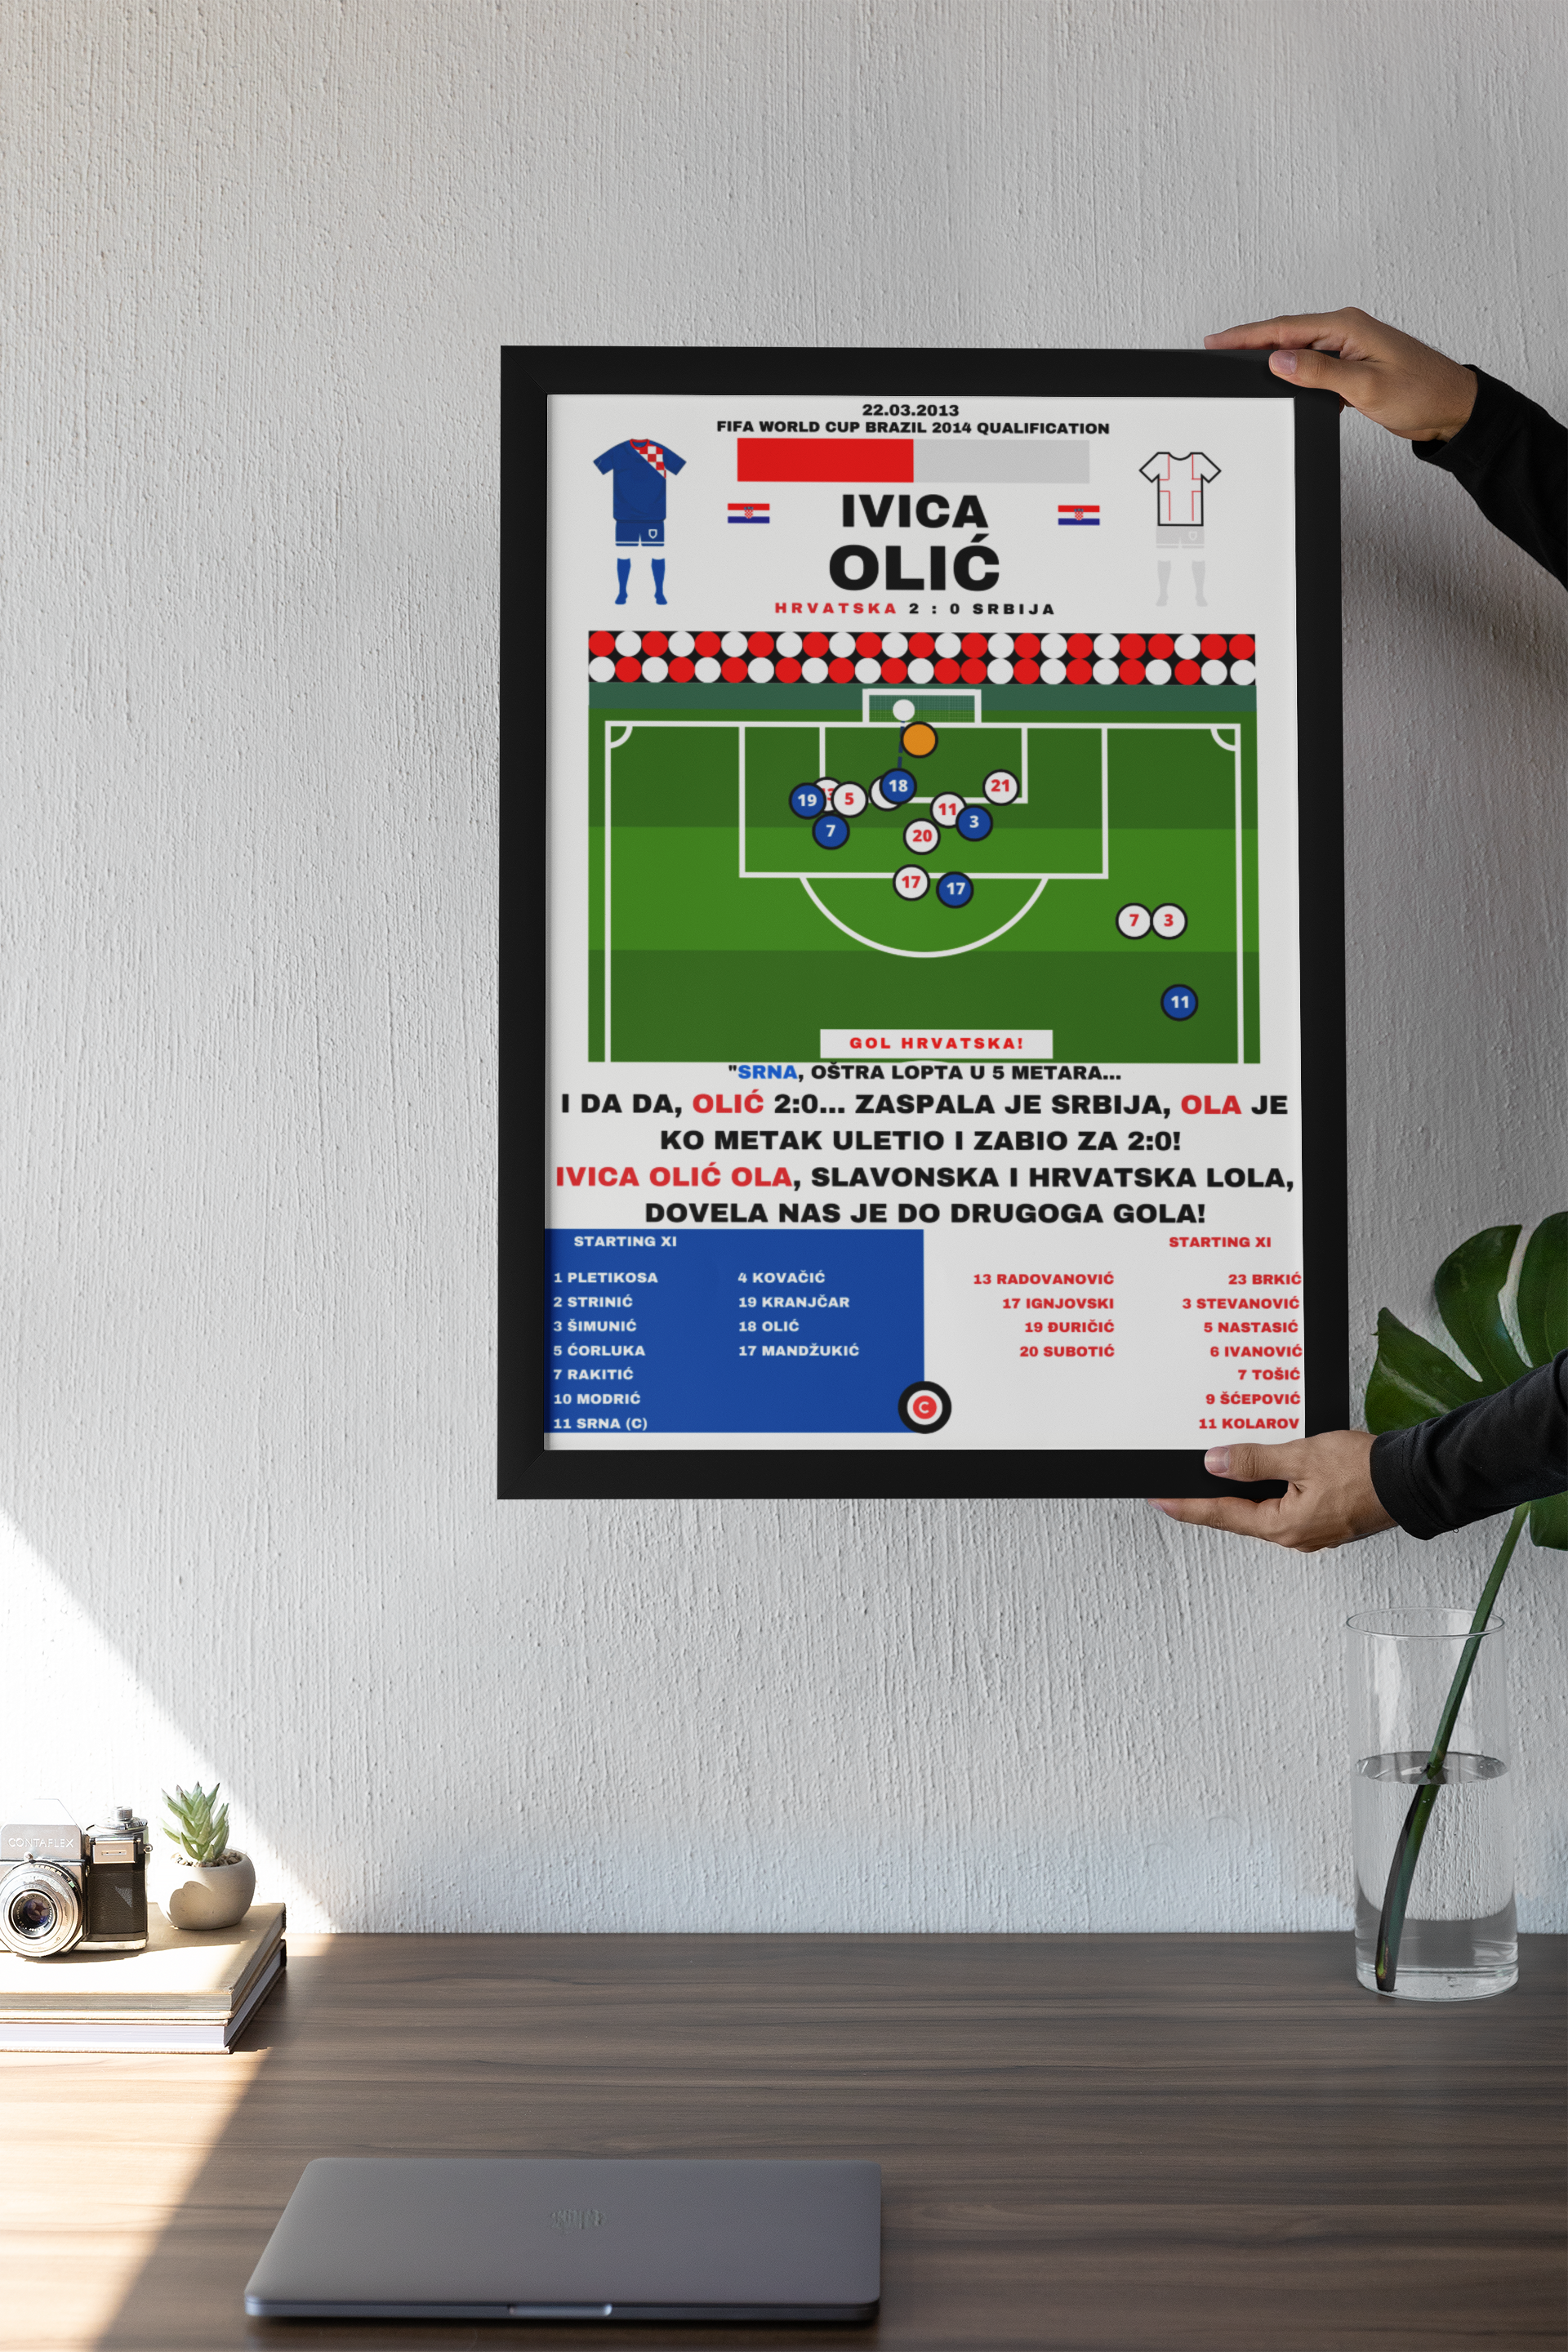 Ivica Olić Goal vs Serbia - FIFA World Cup 2014 Qualifications - Croatia - Premium  from CATENACCIO - Just €14.50! Shop now at CatenaccioDesigns